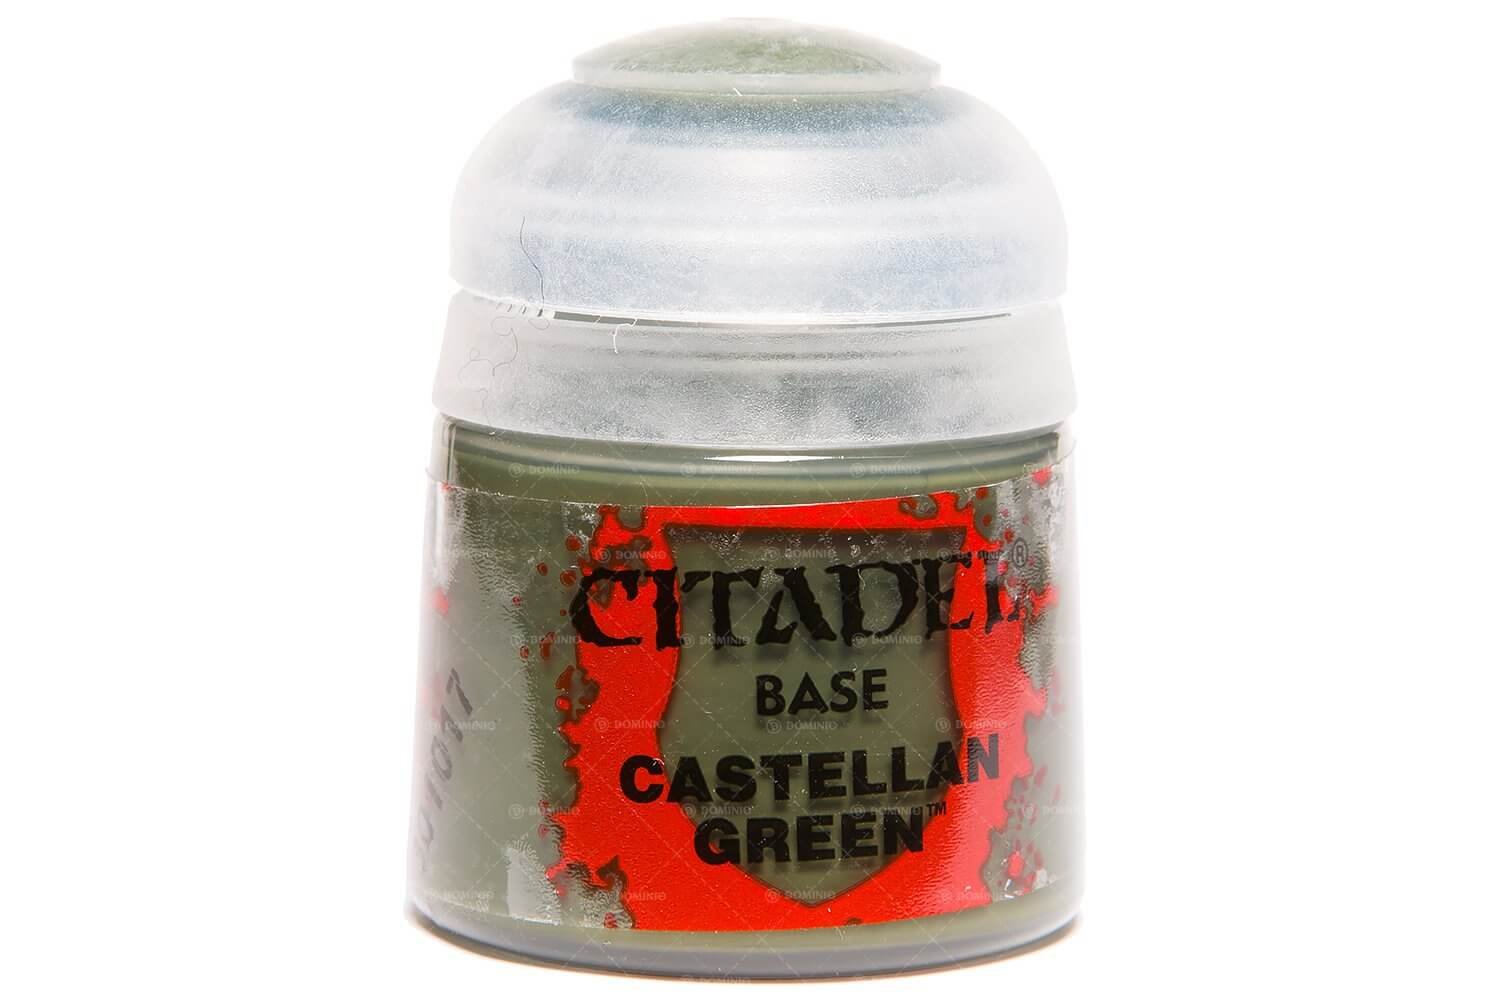 Citadel Paint: Base - Castellan Green